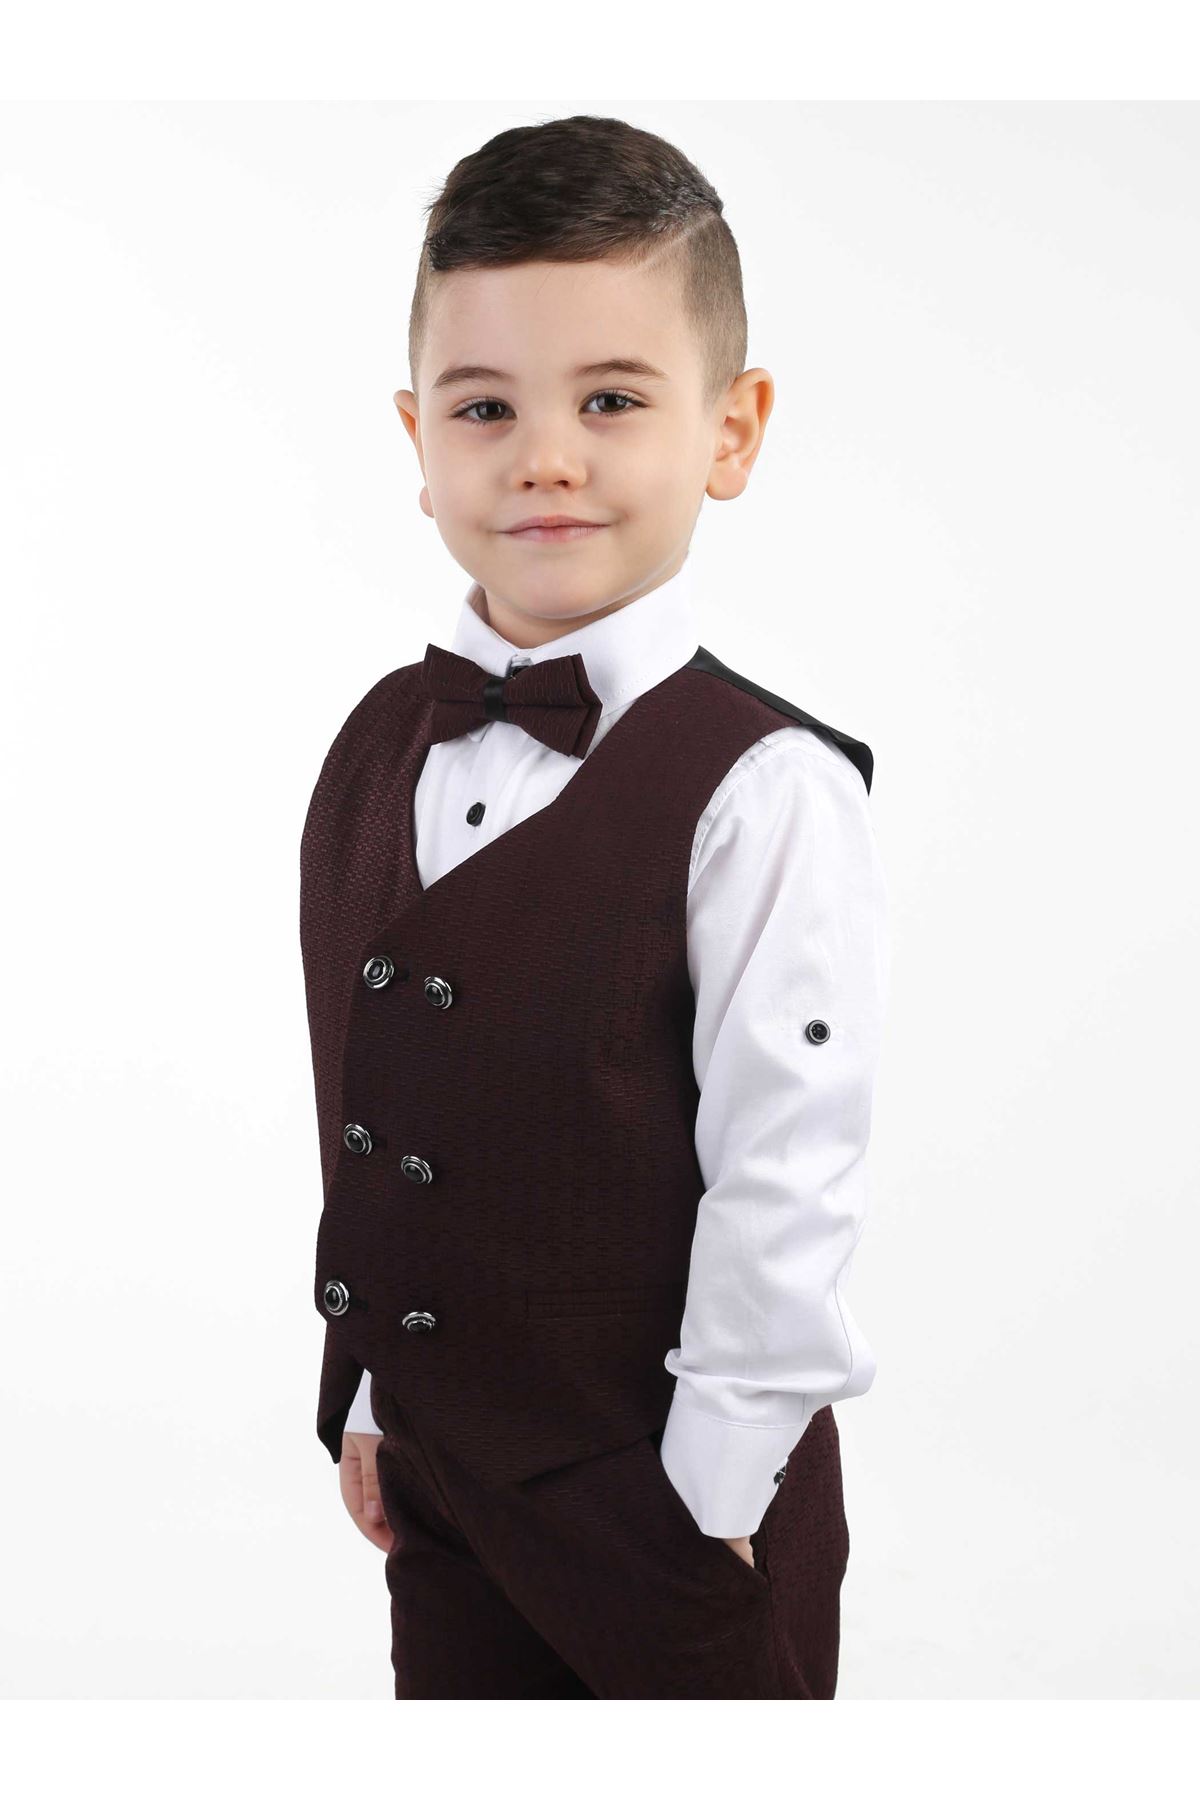 Boy's Clothes Suits Gentleman Bow Tie + Shirt + Pants + Vest Gentleman Clothing Young Suit